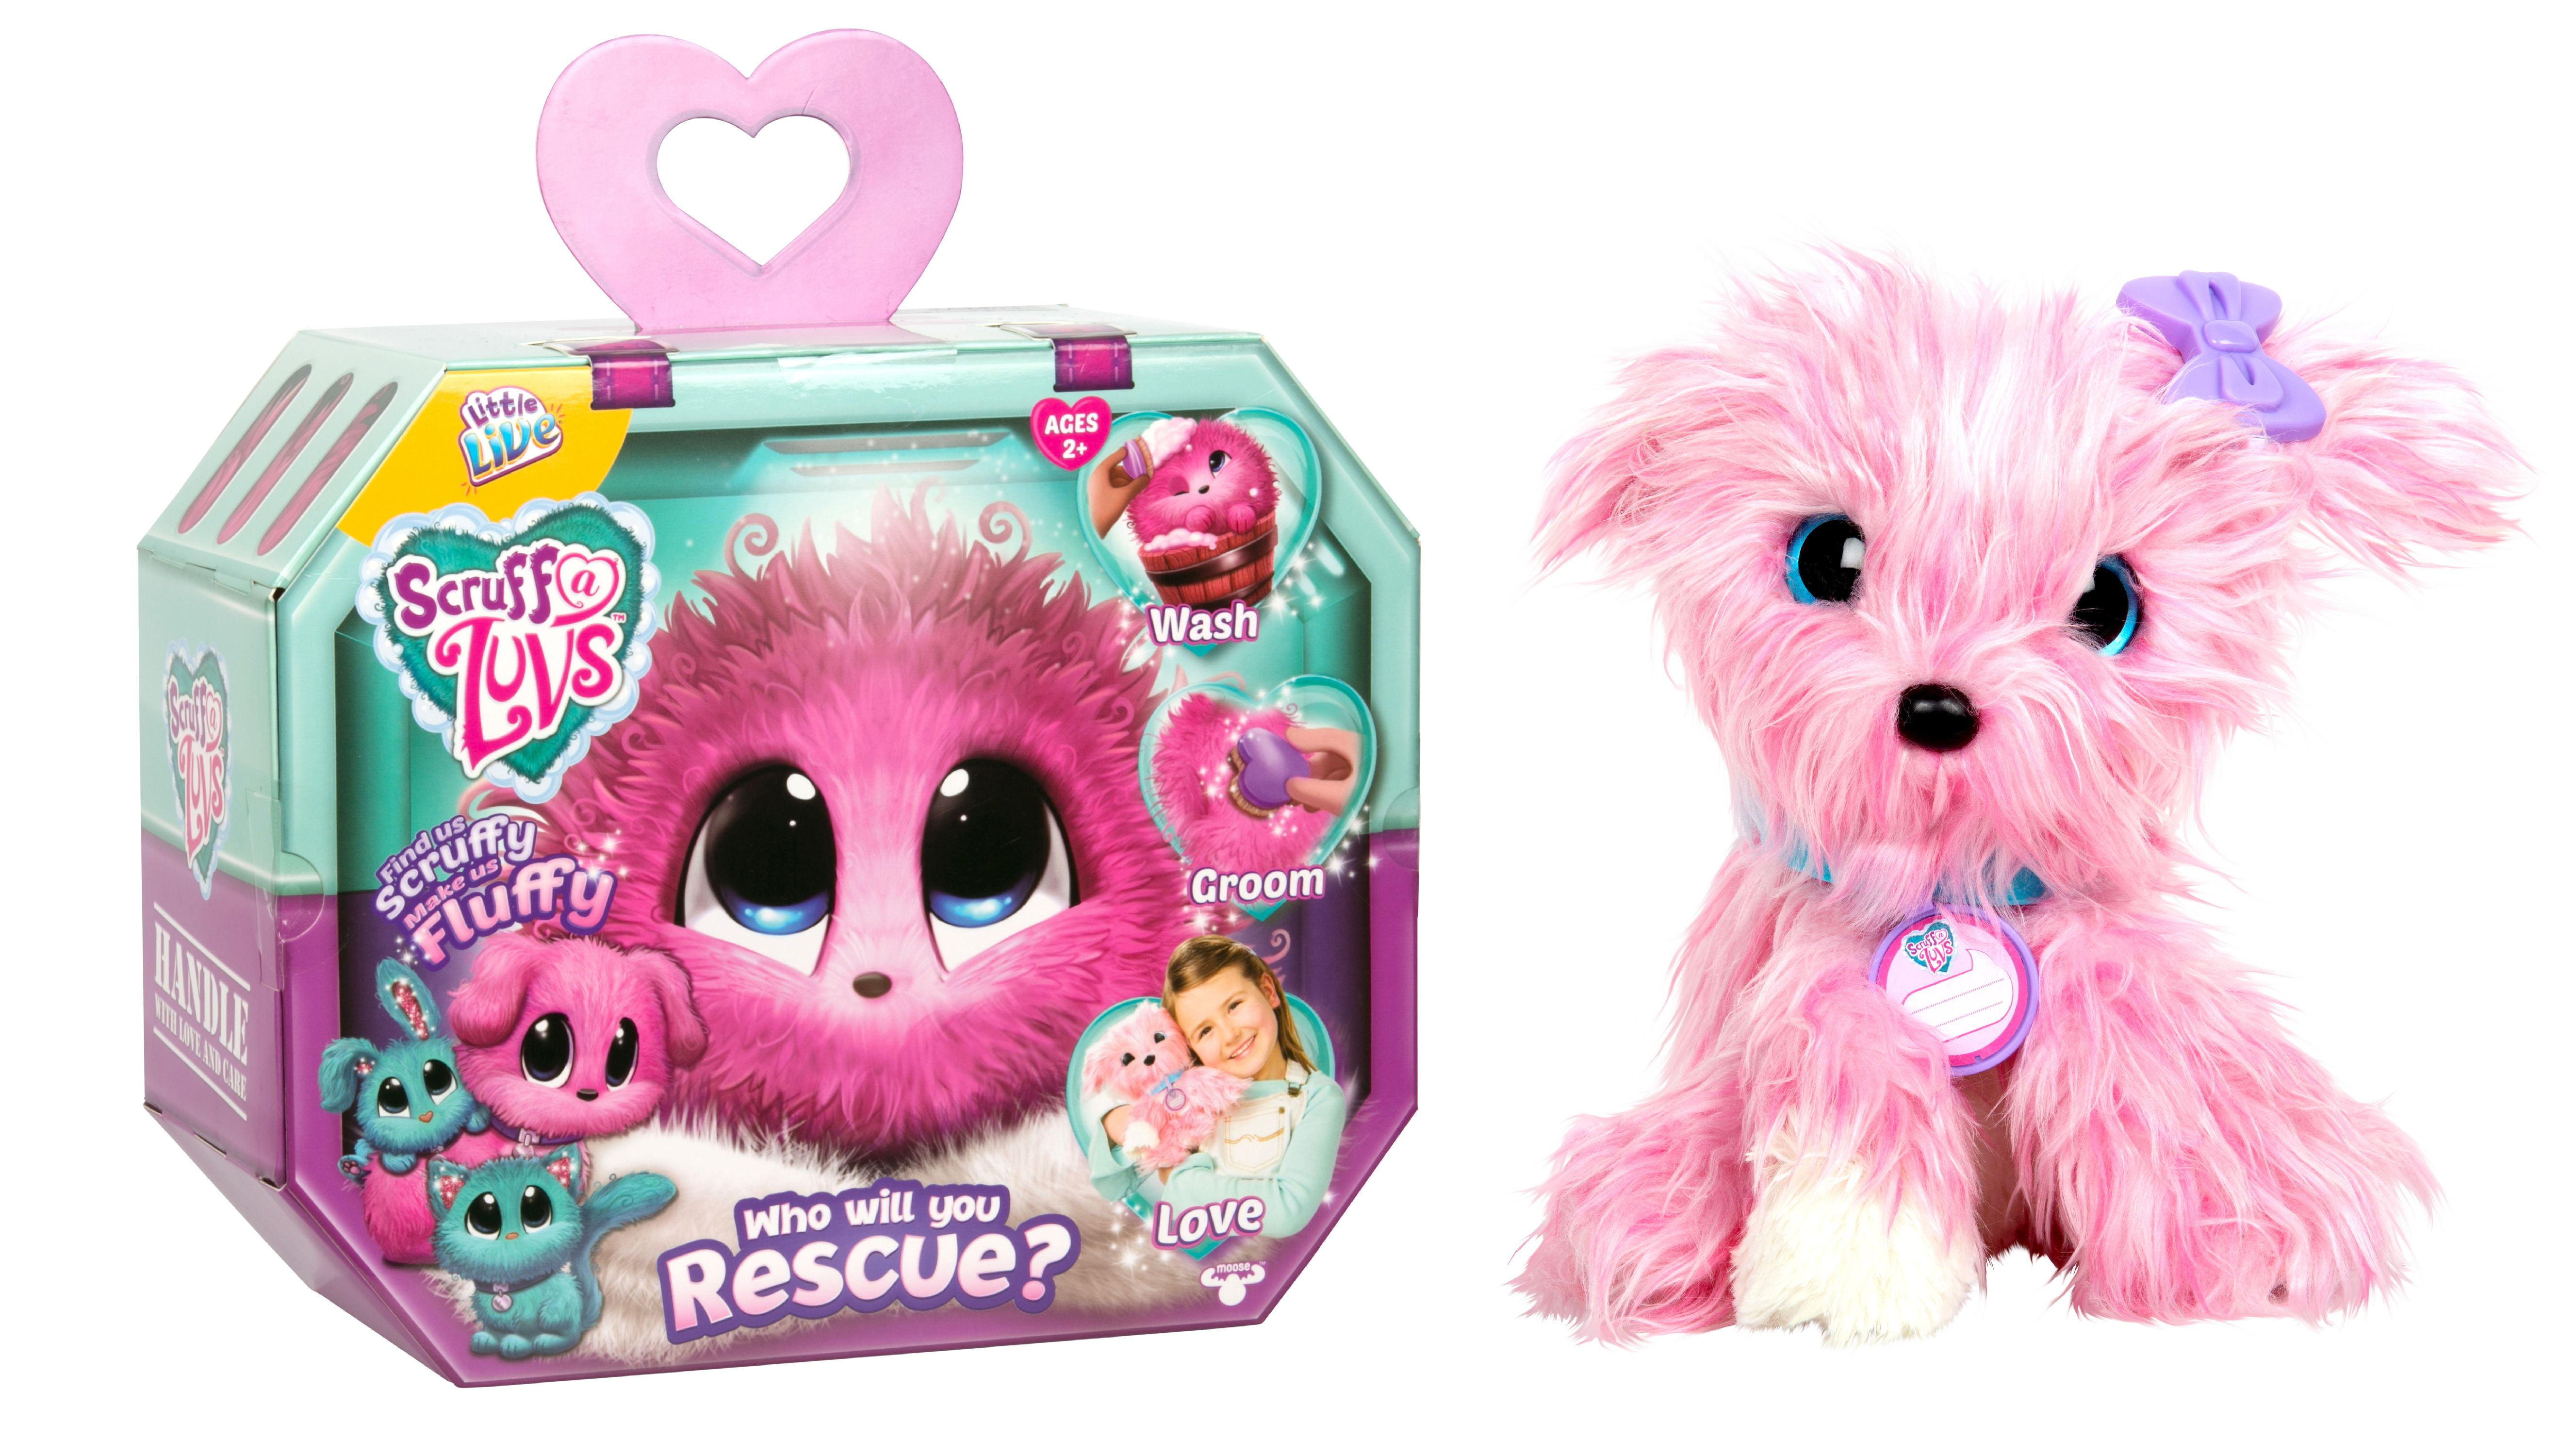 Scruff A Luvs Little Live Girl Plush Mystery Rescue Pet Soft Toy Kids Gift Xmas 